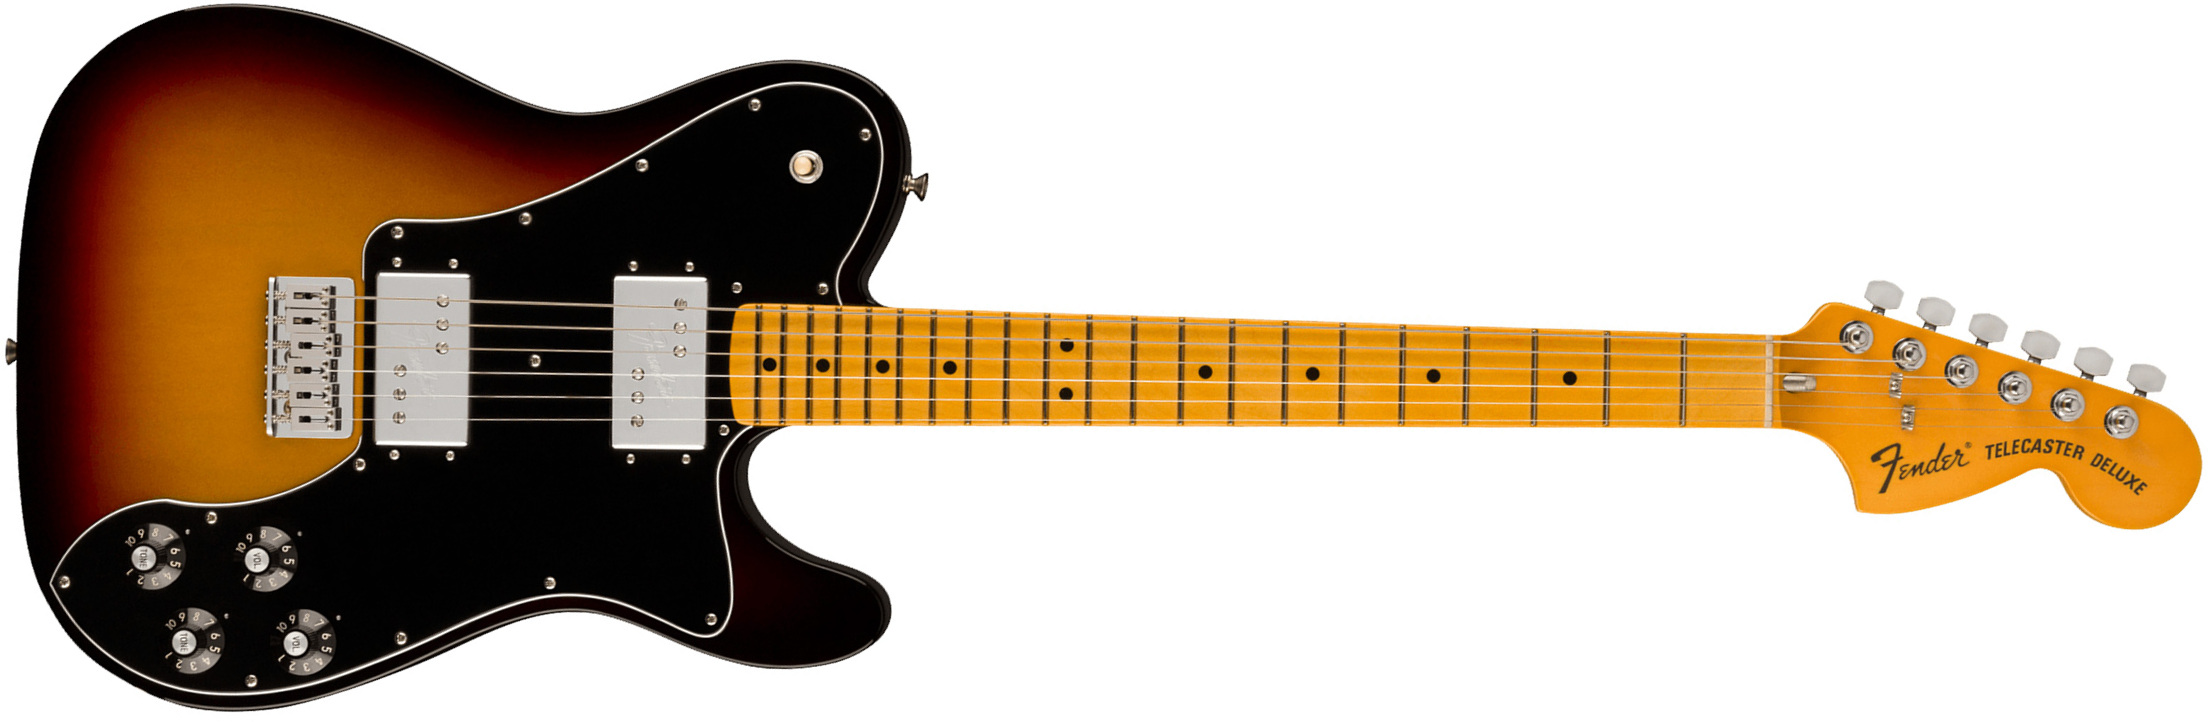 Fender Tele Deluxe 1975 American Vintage Ii Usa 2h Ht Mn - 3-color Sunburst - Tel shape electric guitar - Main picture